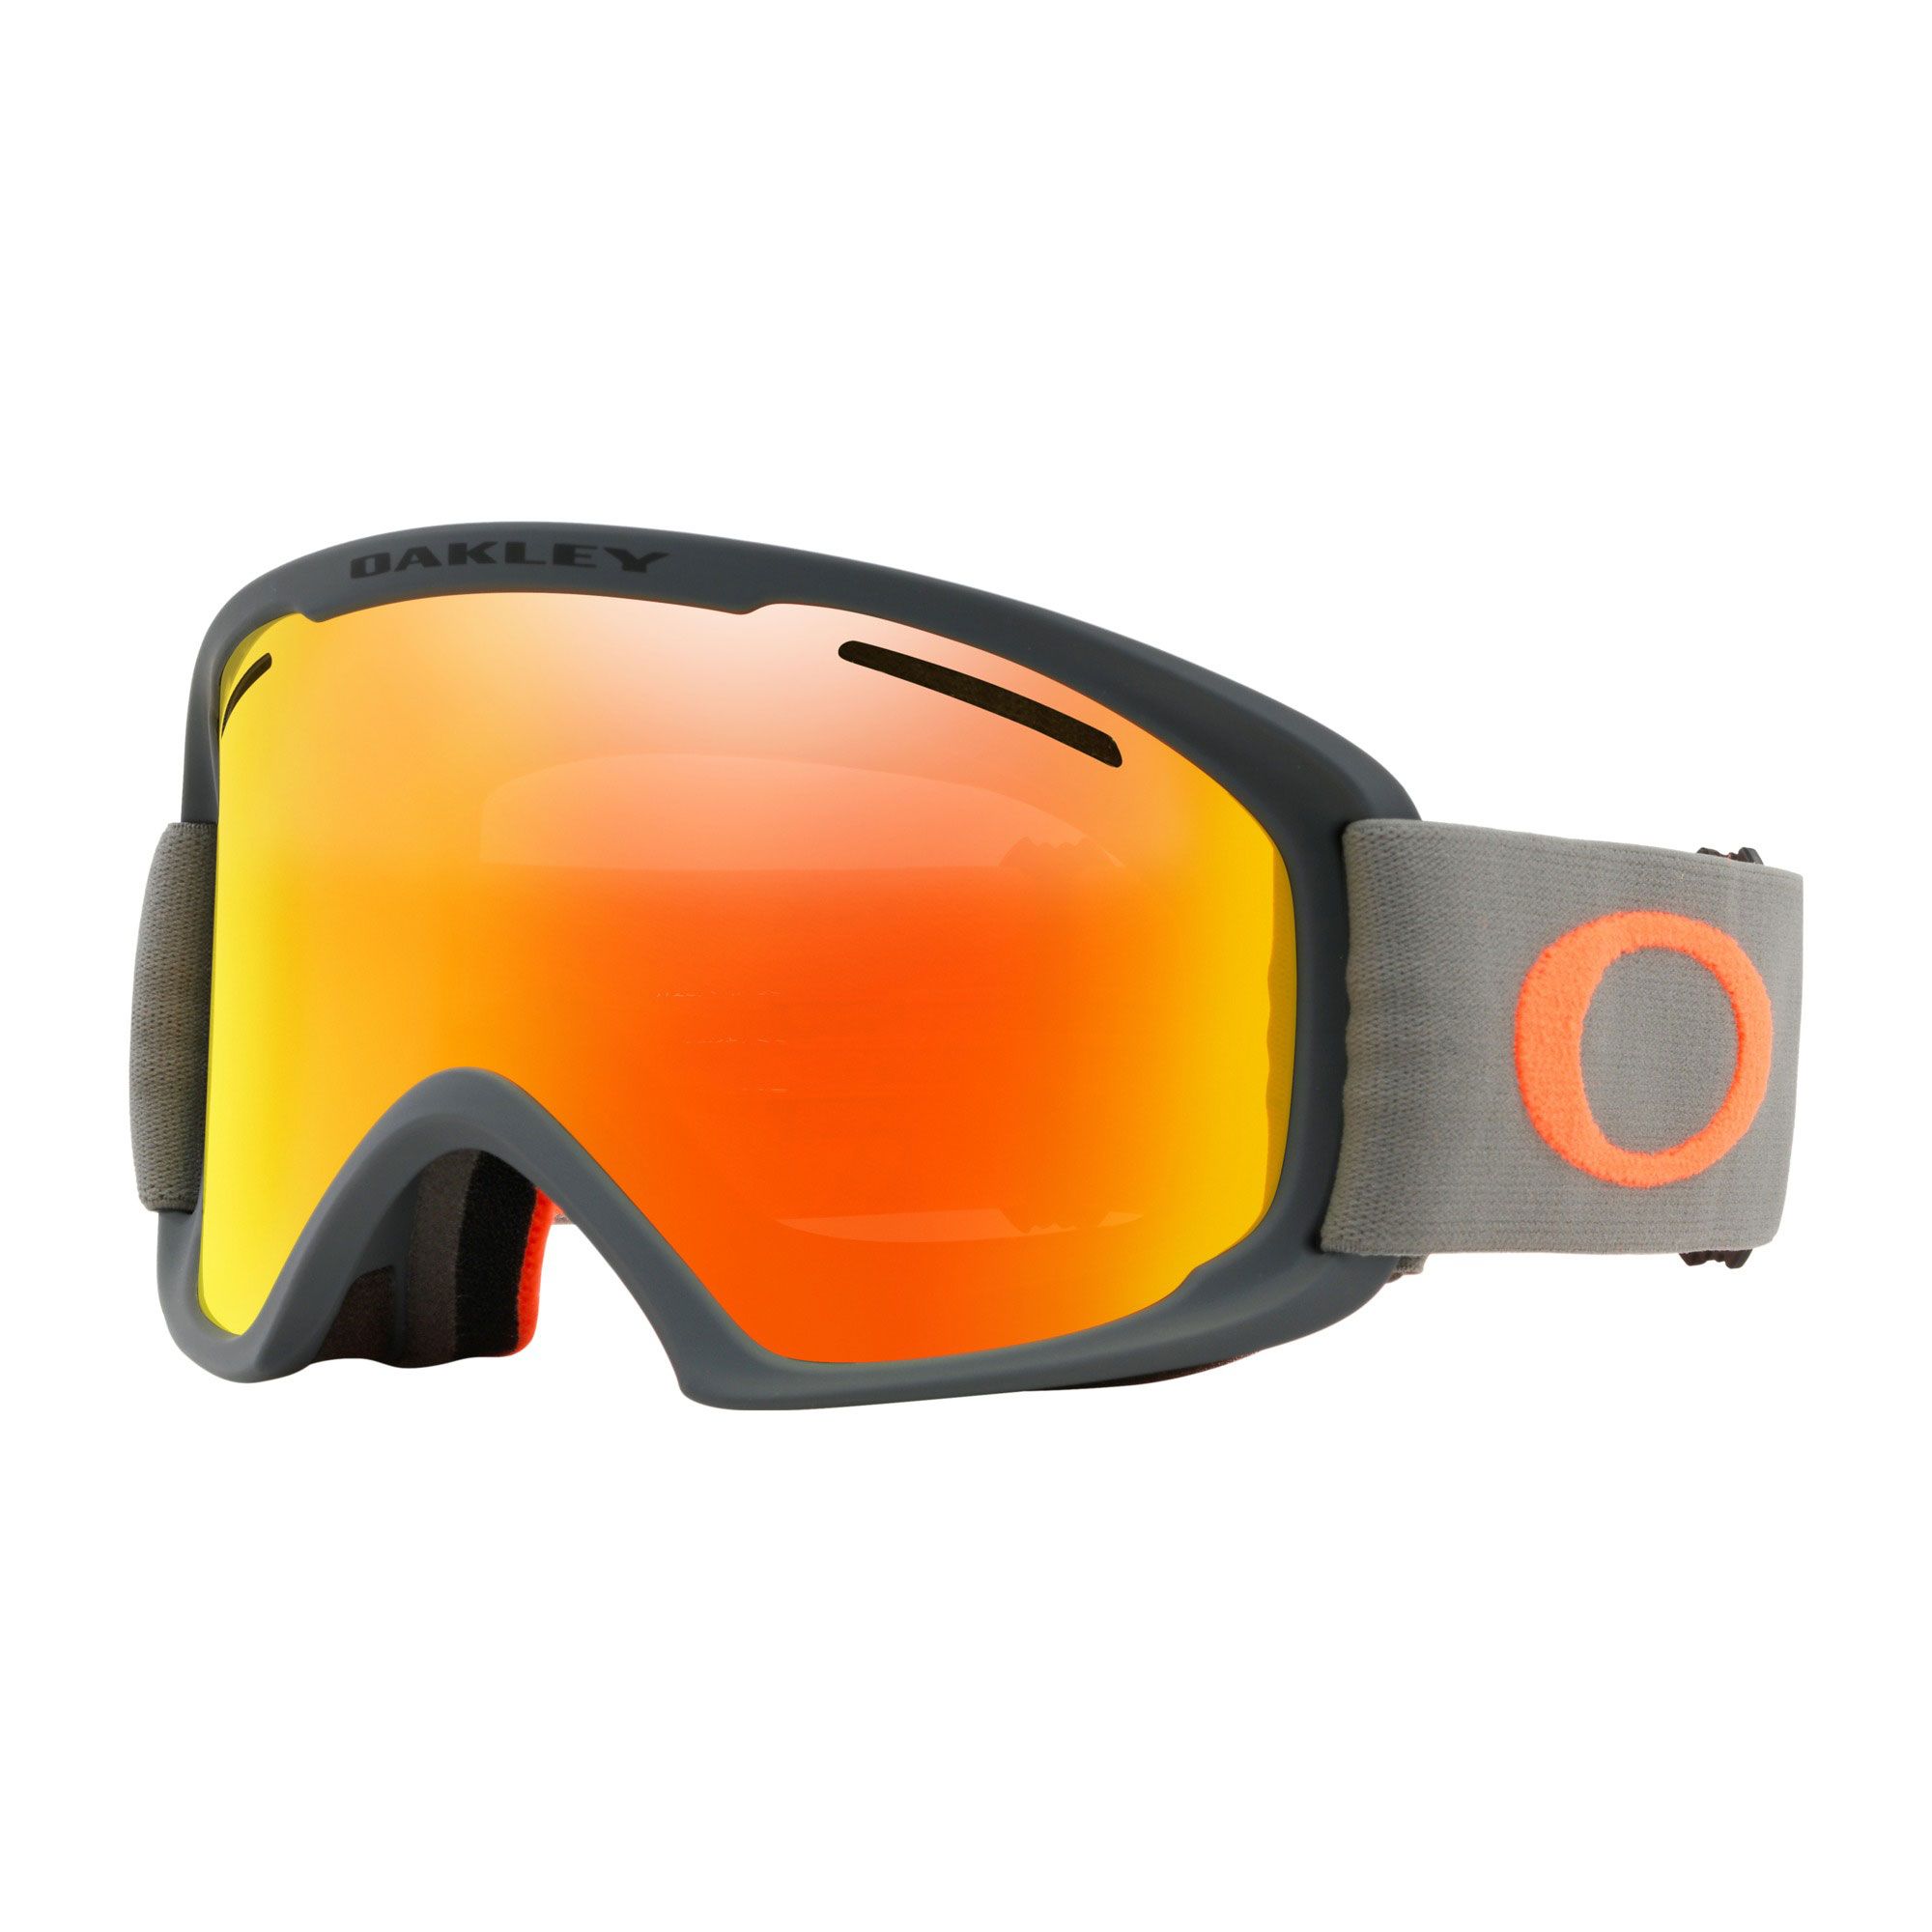 Masque de Ski O-frame 2.0 XL - Dark Brush Orange - Fire Iridium + Persimmon